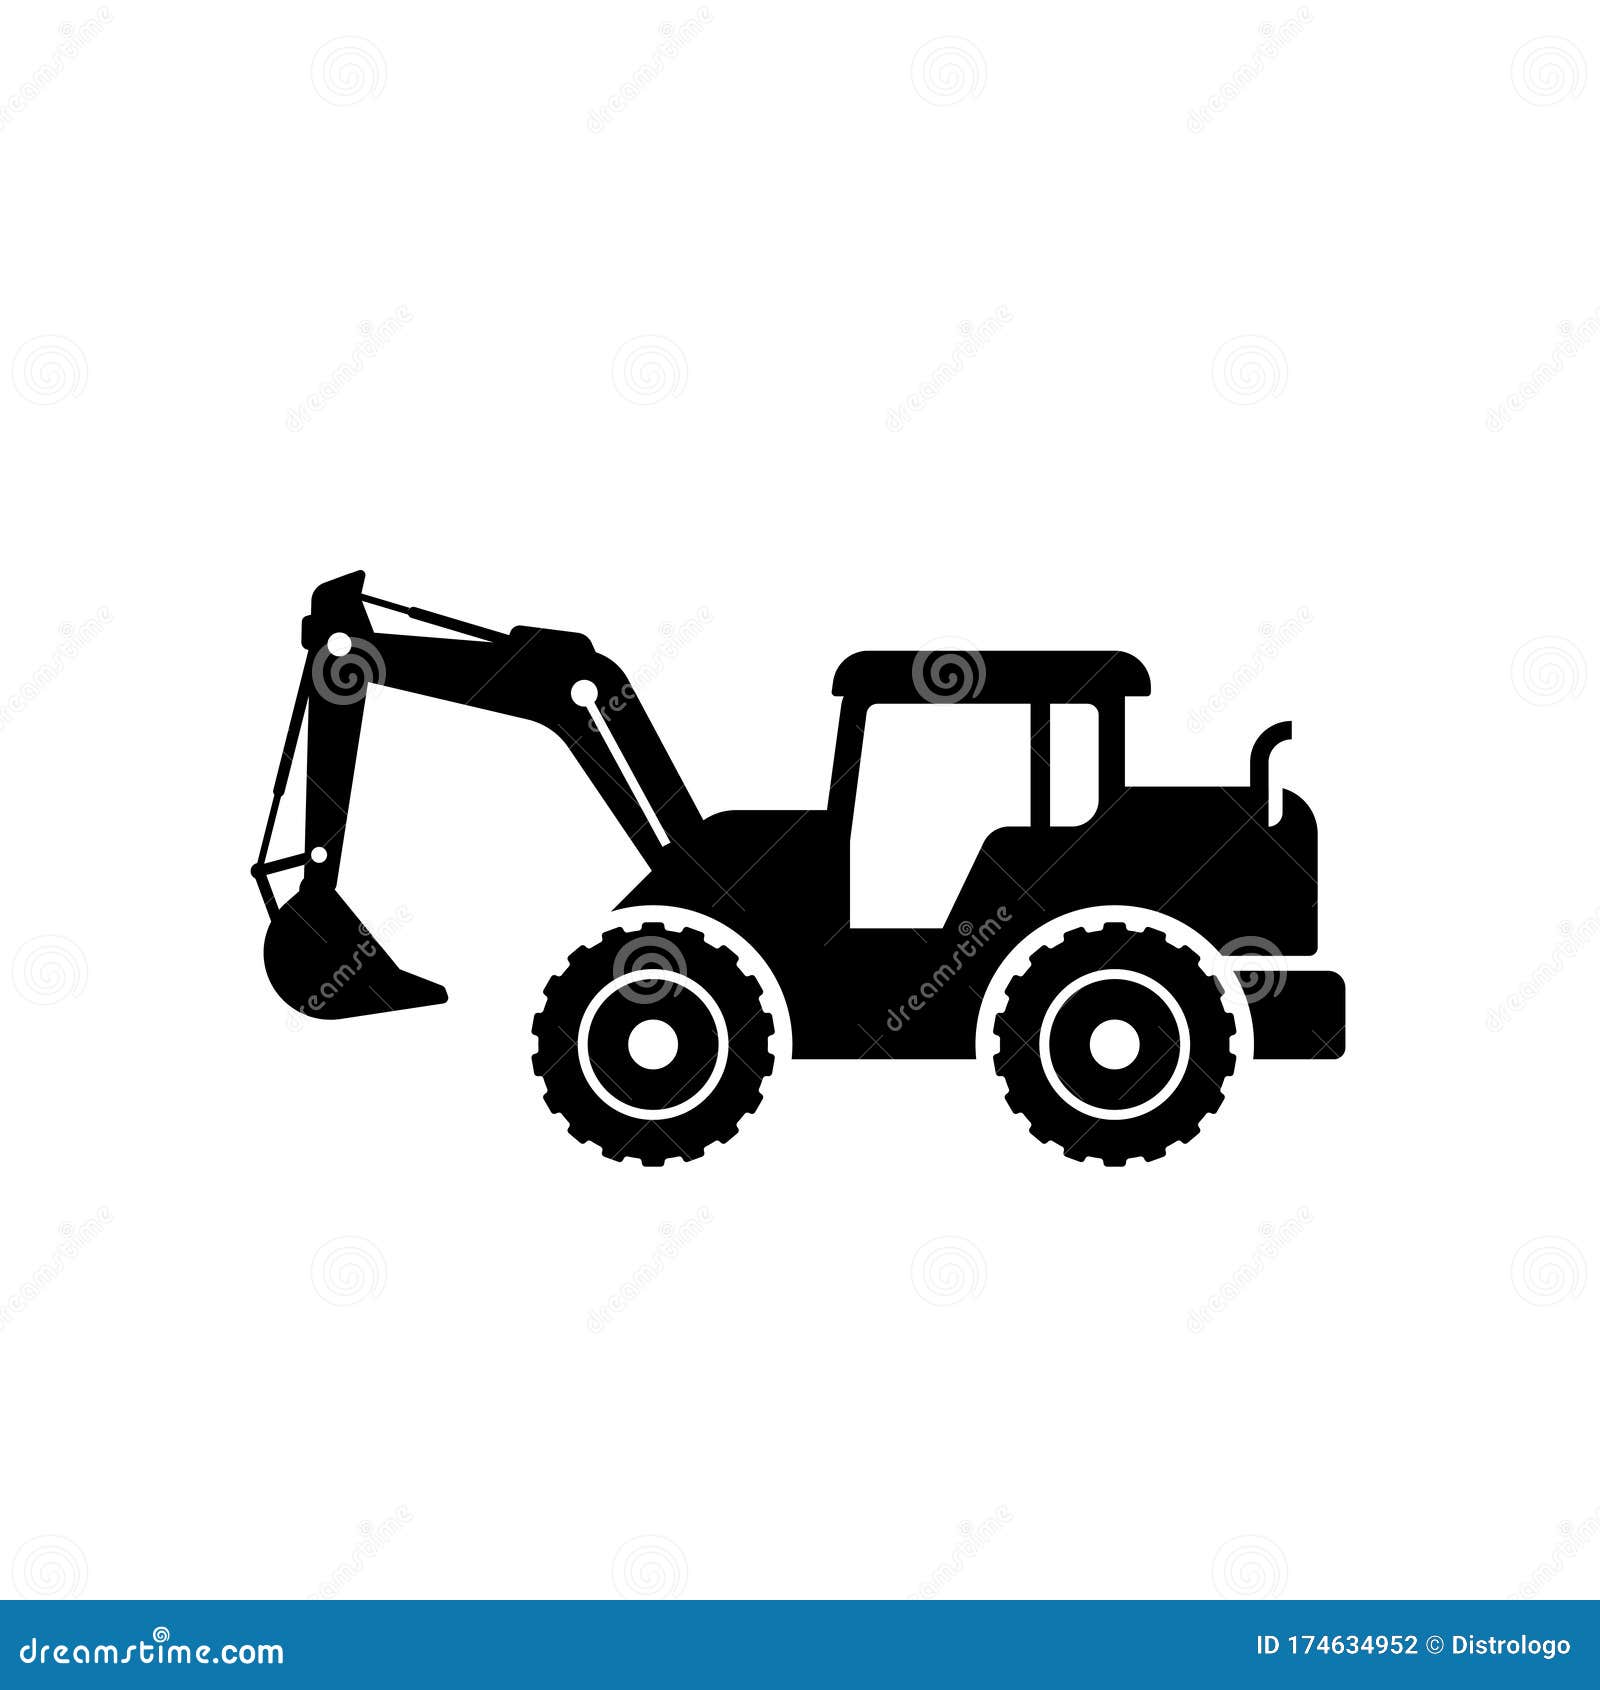 Download Silhouette Of Excavator Vector Design. Excavator Icon Sign Symbol Stock Vector - Illustration of ...